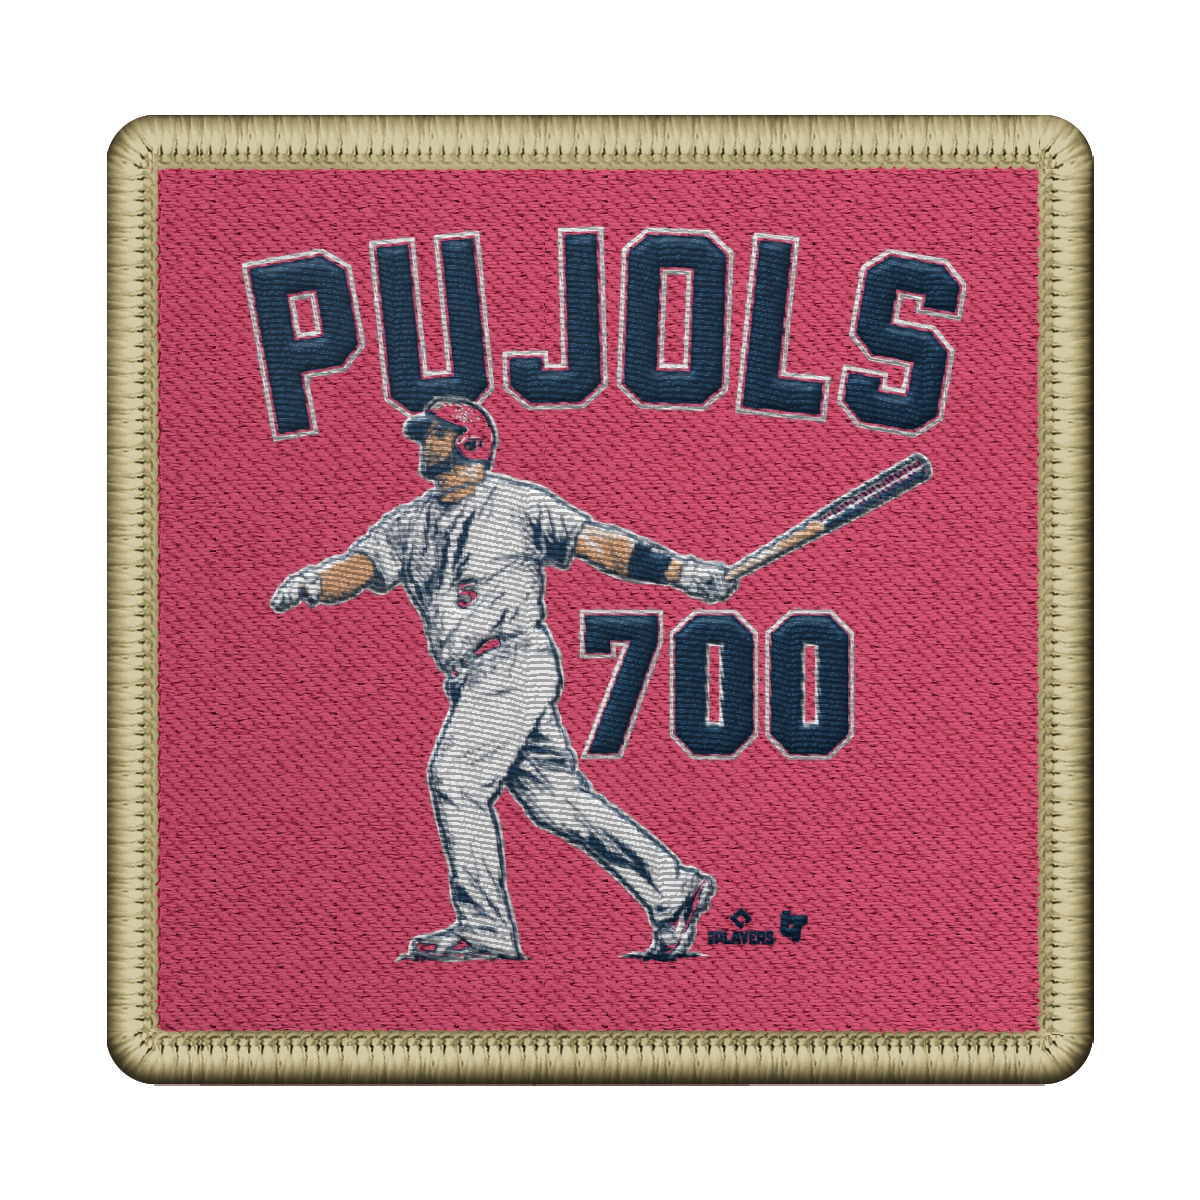 Albert Pujols: 700 Home Run Club LE 1/1 NFT